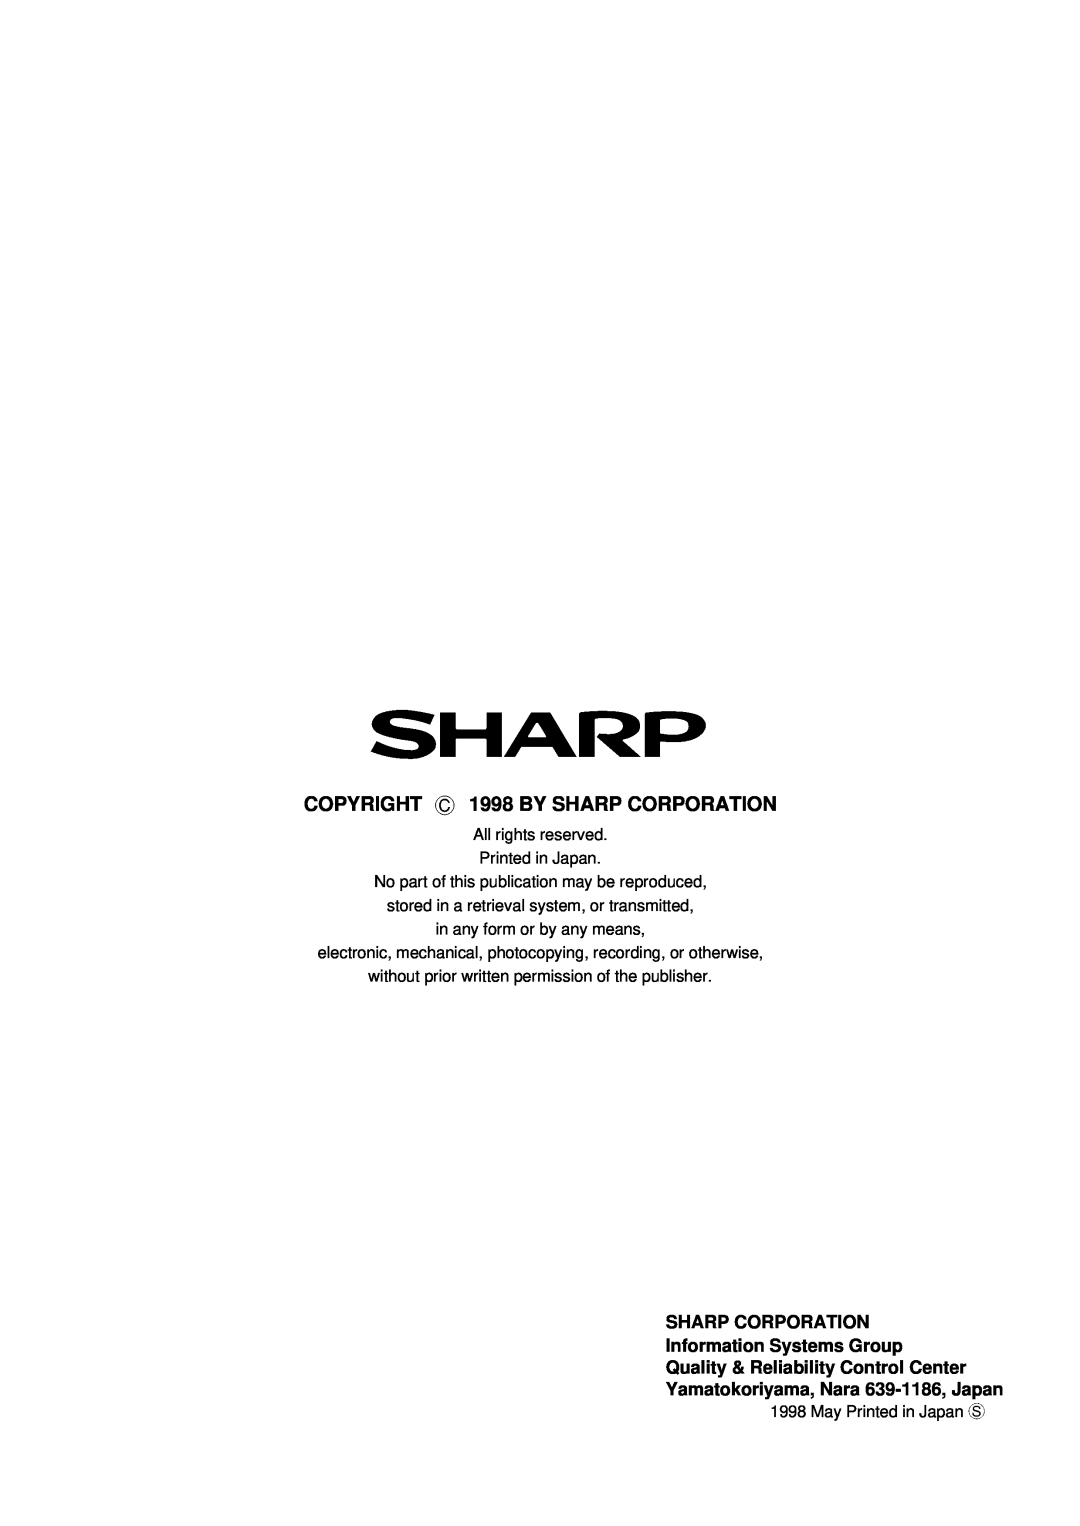 Sharp ER-A440 manual COPYRIGHT 1998 BY SHARP CORPORATION, SHARP CORPORATION Information Systems Group 